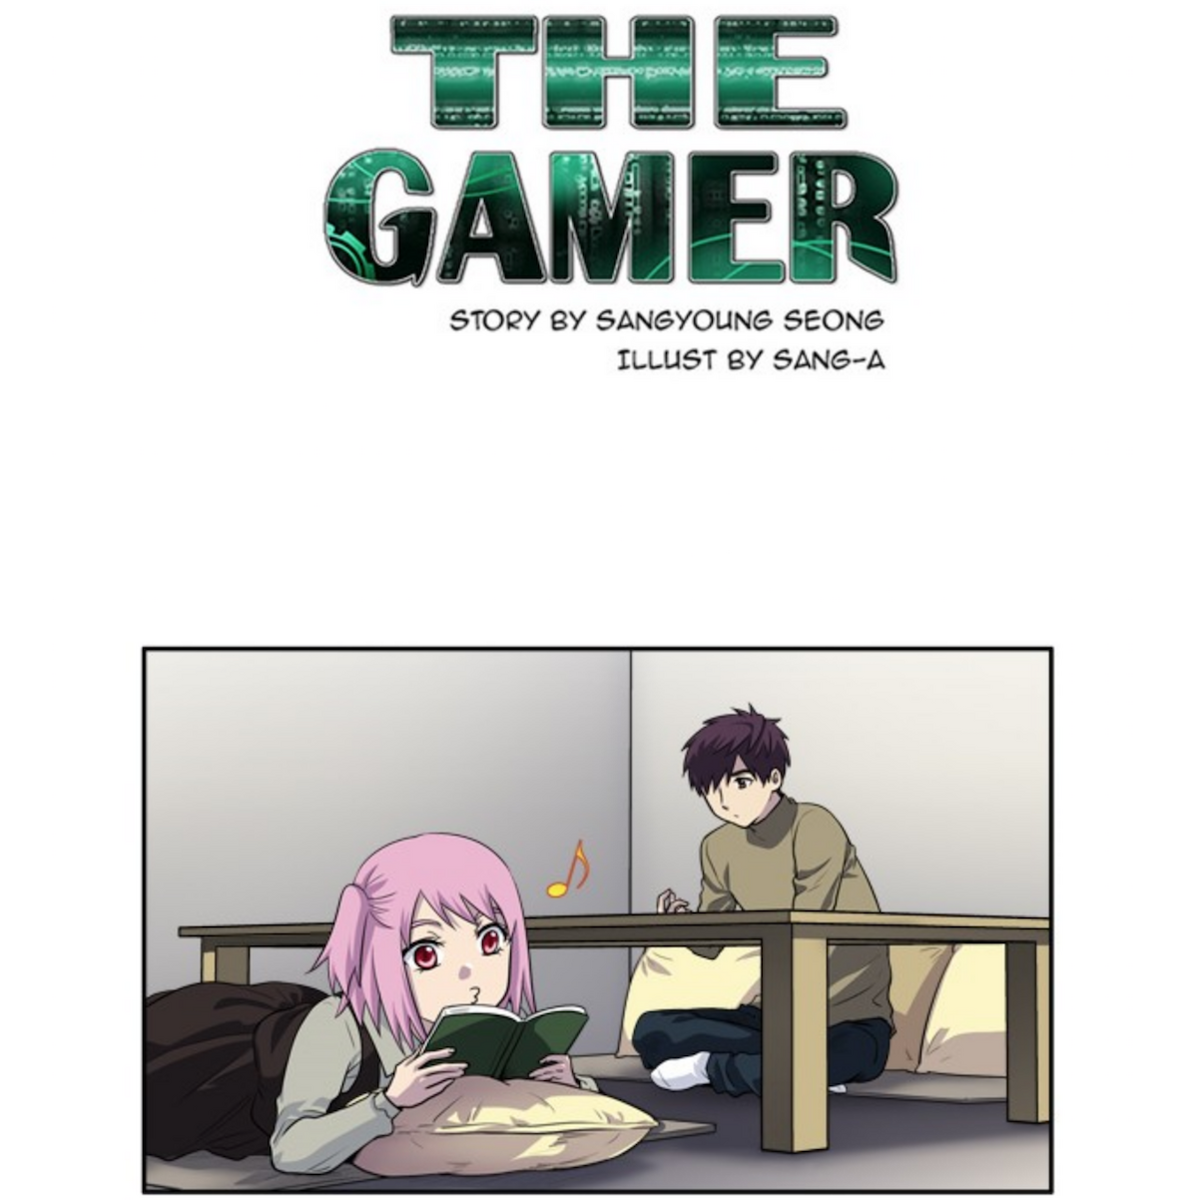 The Gamer, Webtoon Wiki